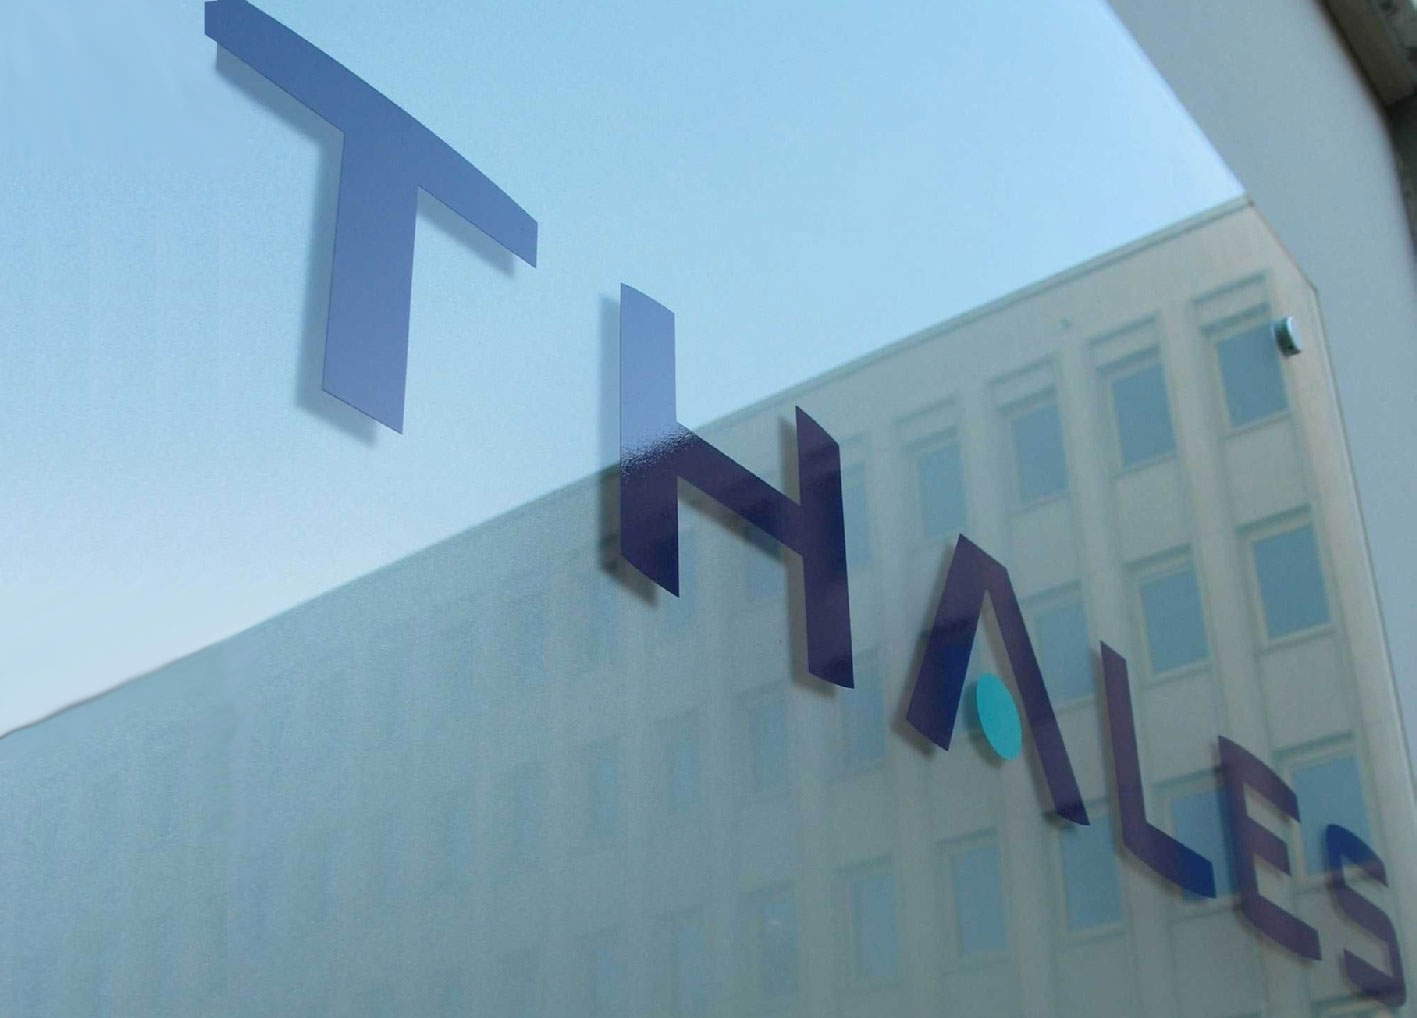 Thales acquires Gemalto in huge digital security deal - SecureIDNews